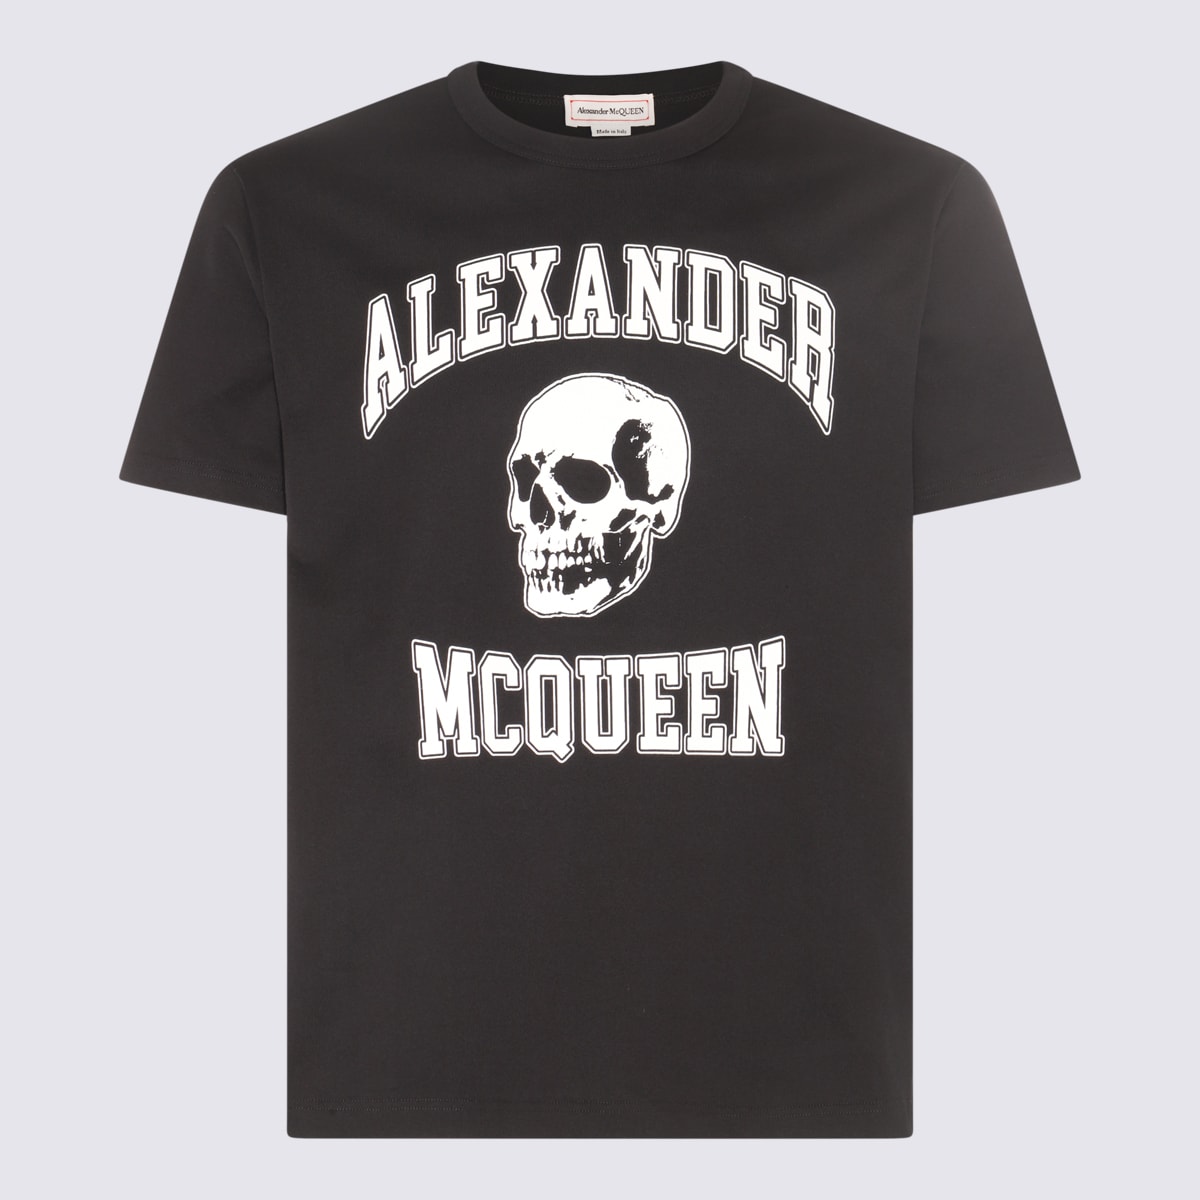 Alexander Mcqueen Black And White Cotton T-shirt